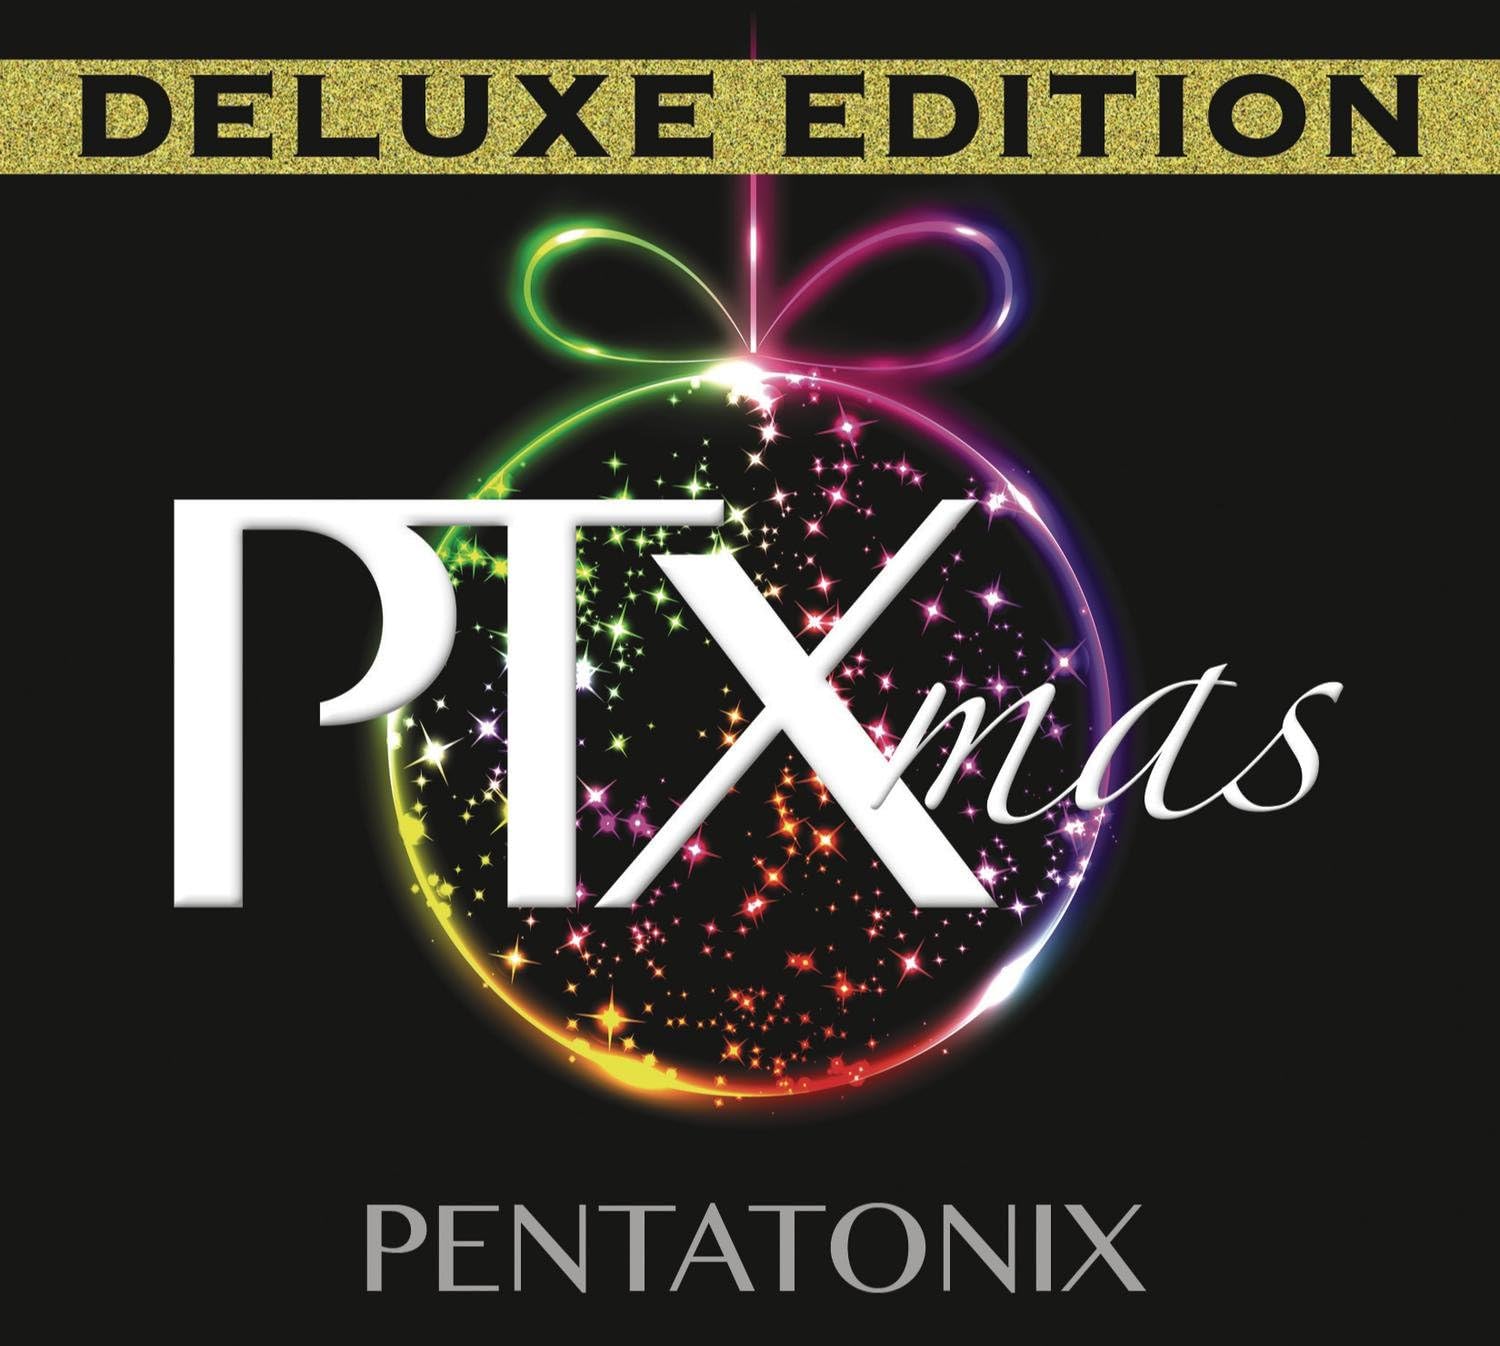 Pentatonix - PTXMAS: Deluxe Edition (2013, CD)